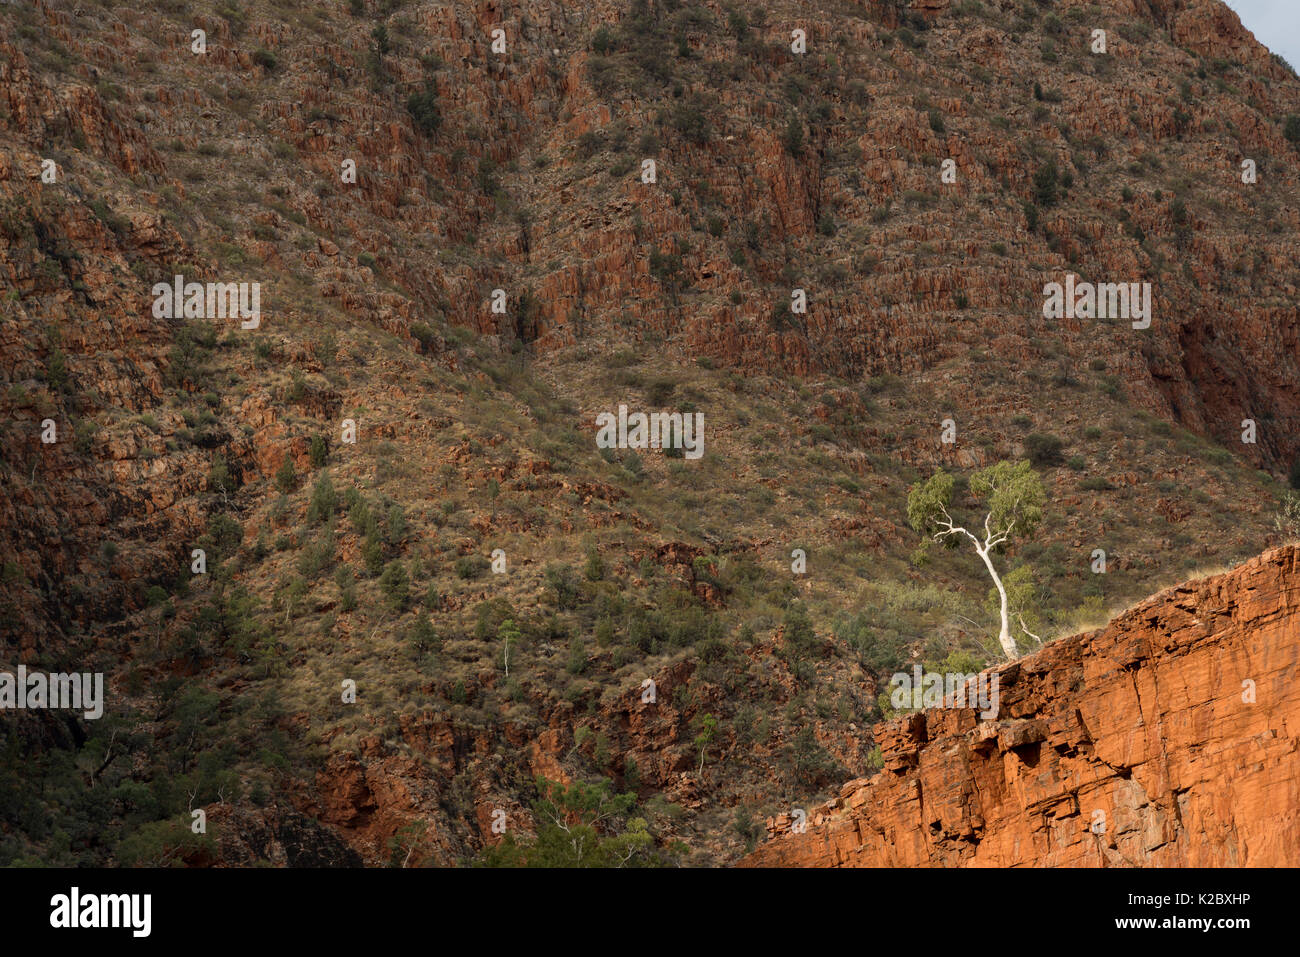 Red River gum tree (Eucalyptus camaldulensis) Redbank Gorge, West MacDonnell Ranges, Alice Springs, Territoire du Nord, Australie. Banque D'Images